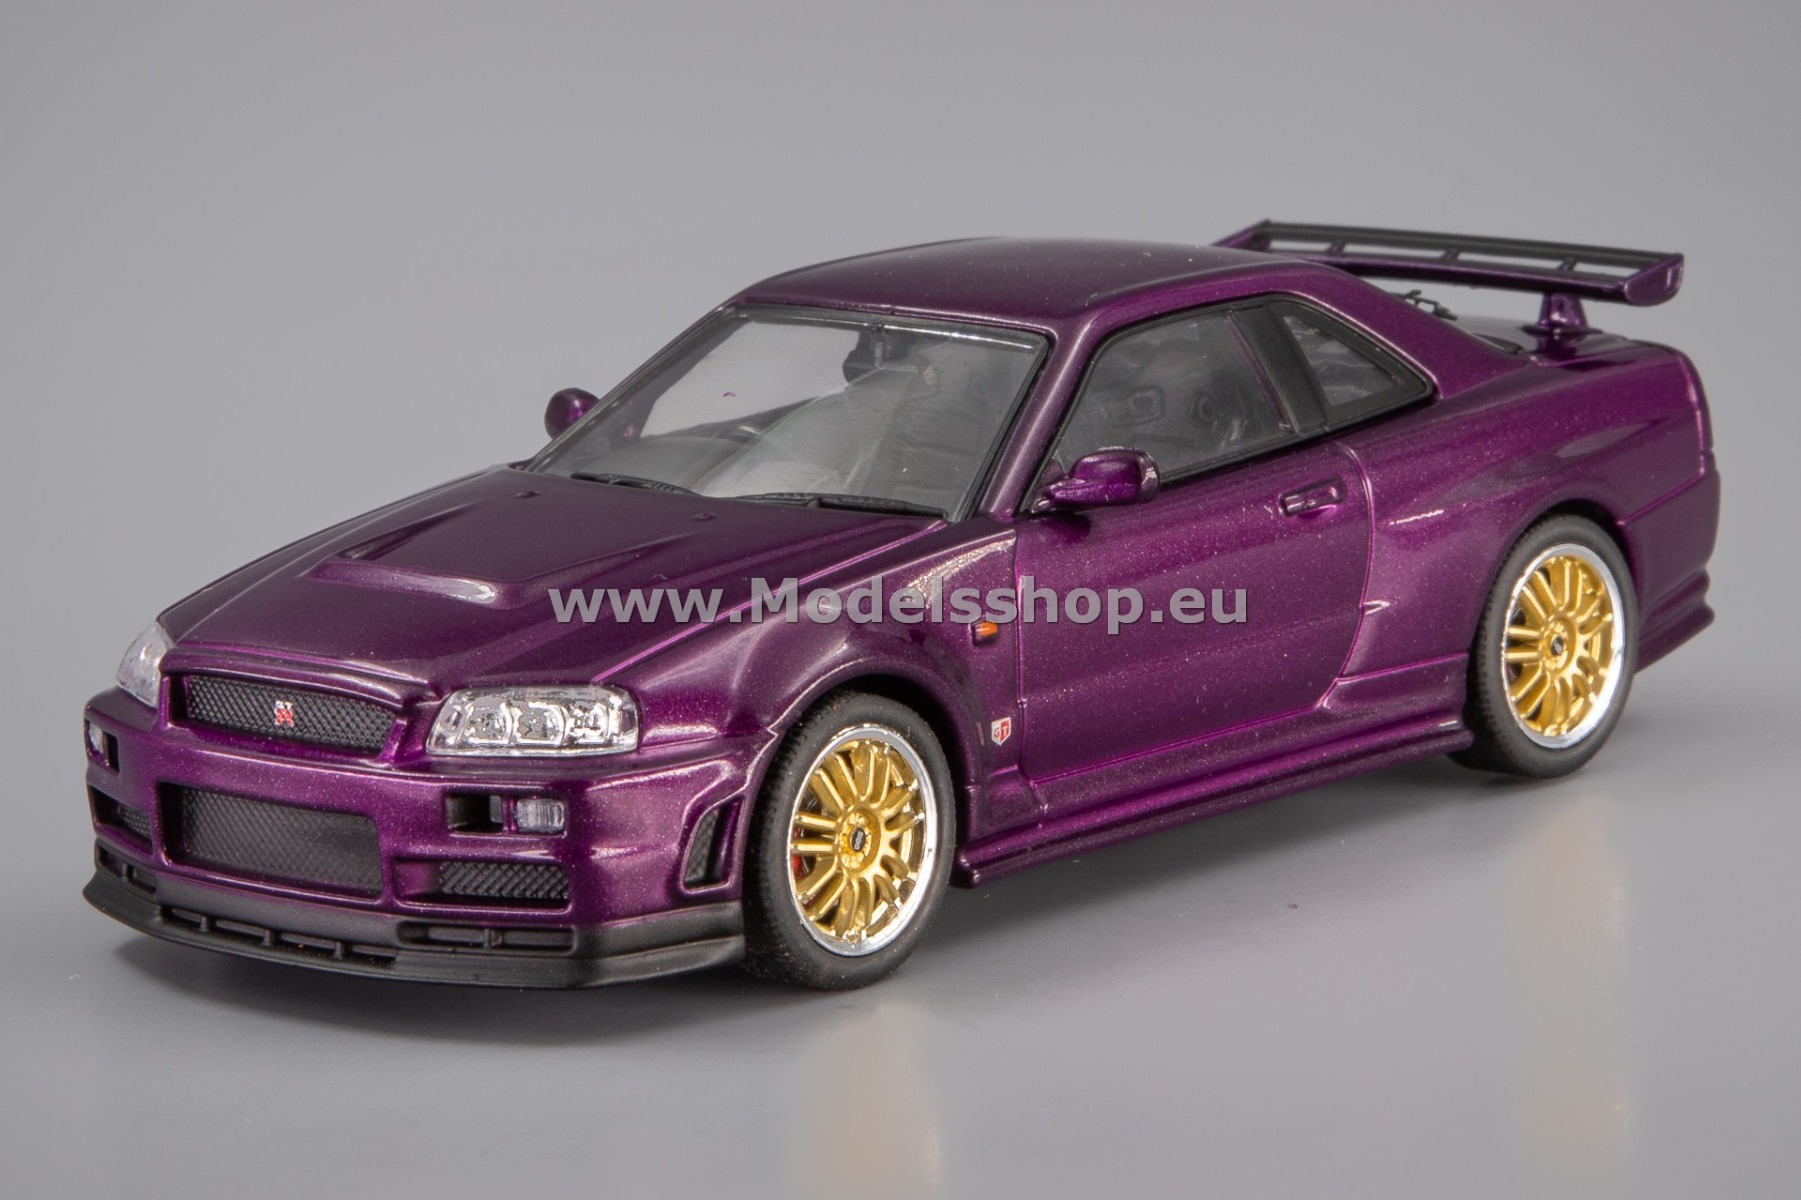 IXO CLC526N.22 Nissan Skyline GT-R (R34) custom, RHD, 2002 /purple - metallic/